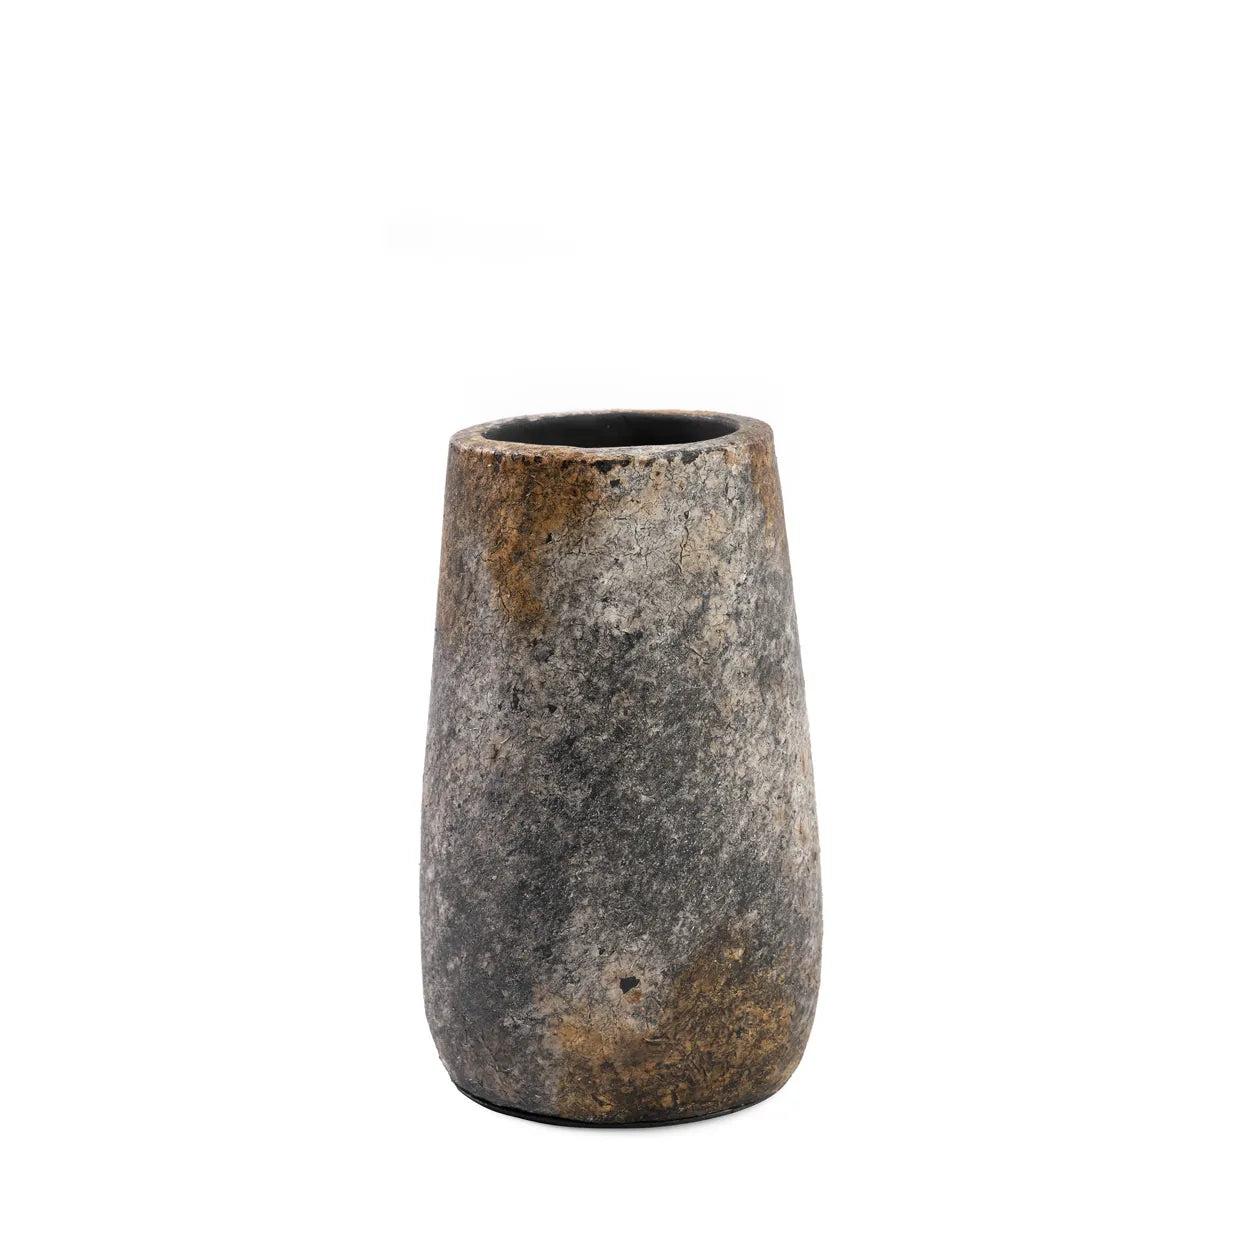 El Ejido Terracotta Vase - Sleek Narrow Vase